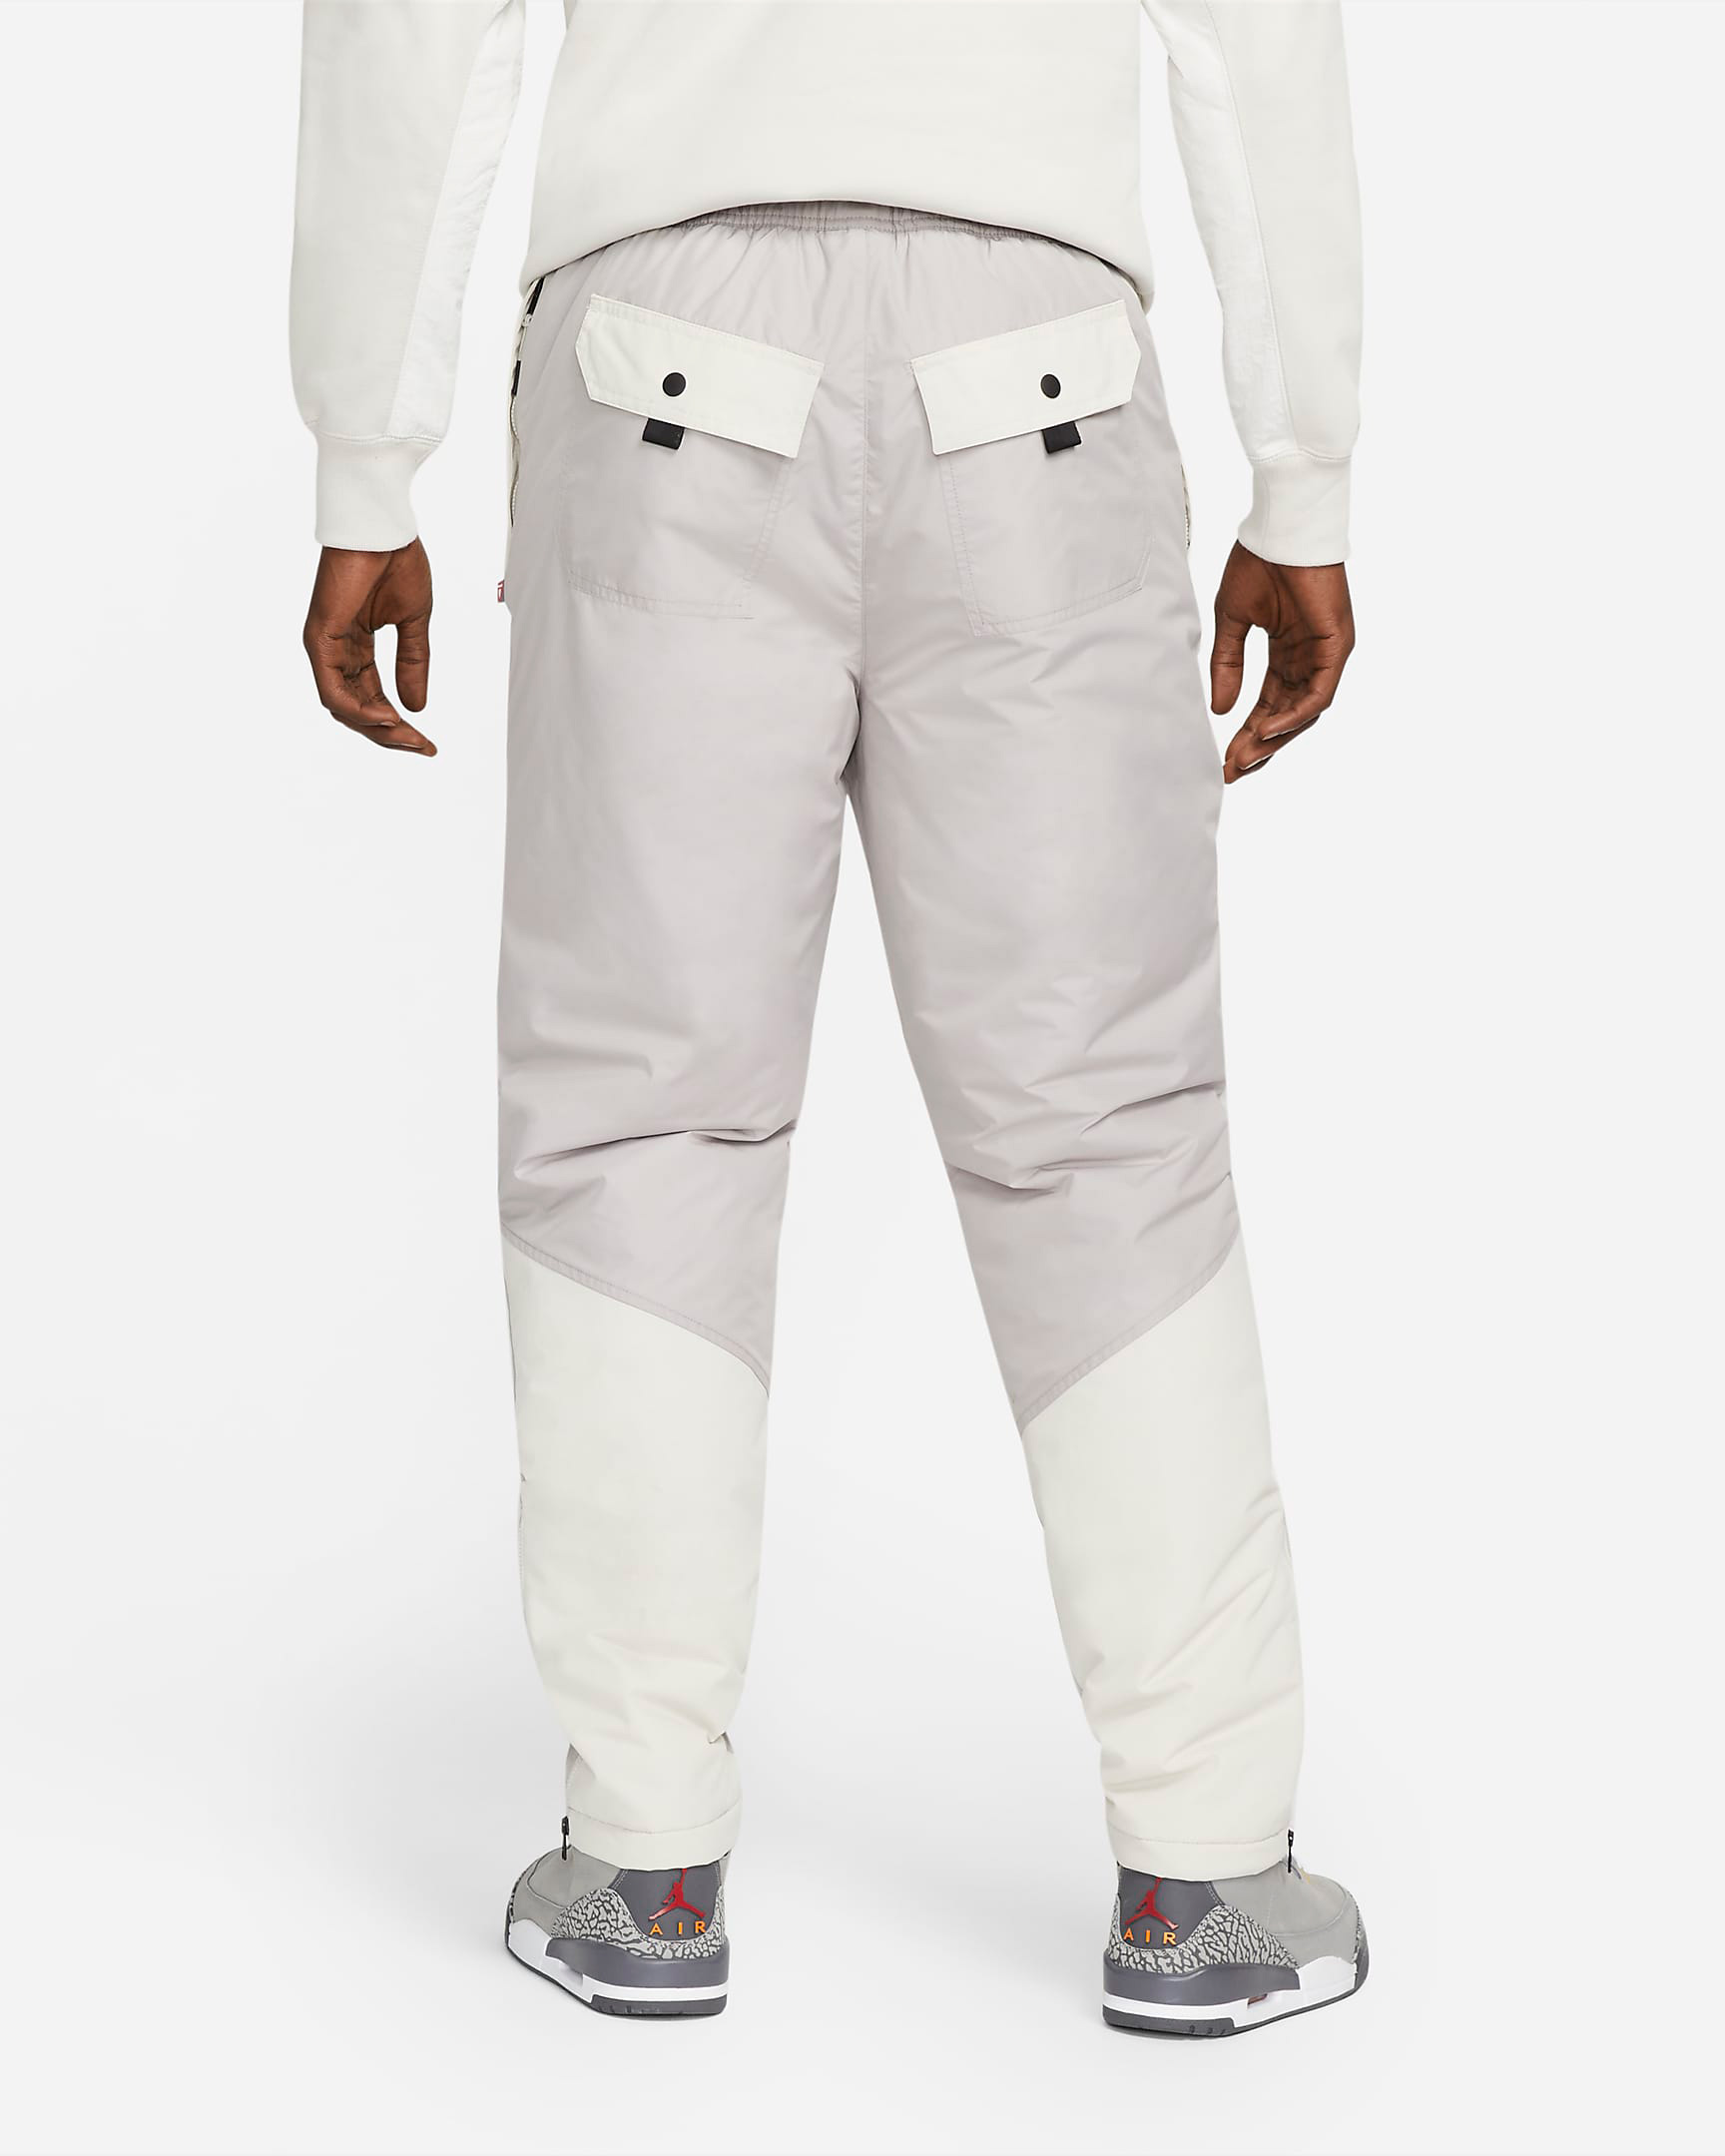 jordan-23-engineered-woven-pants-college-grey-light-bone-2